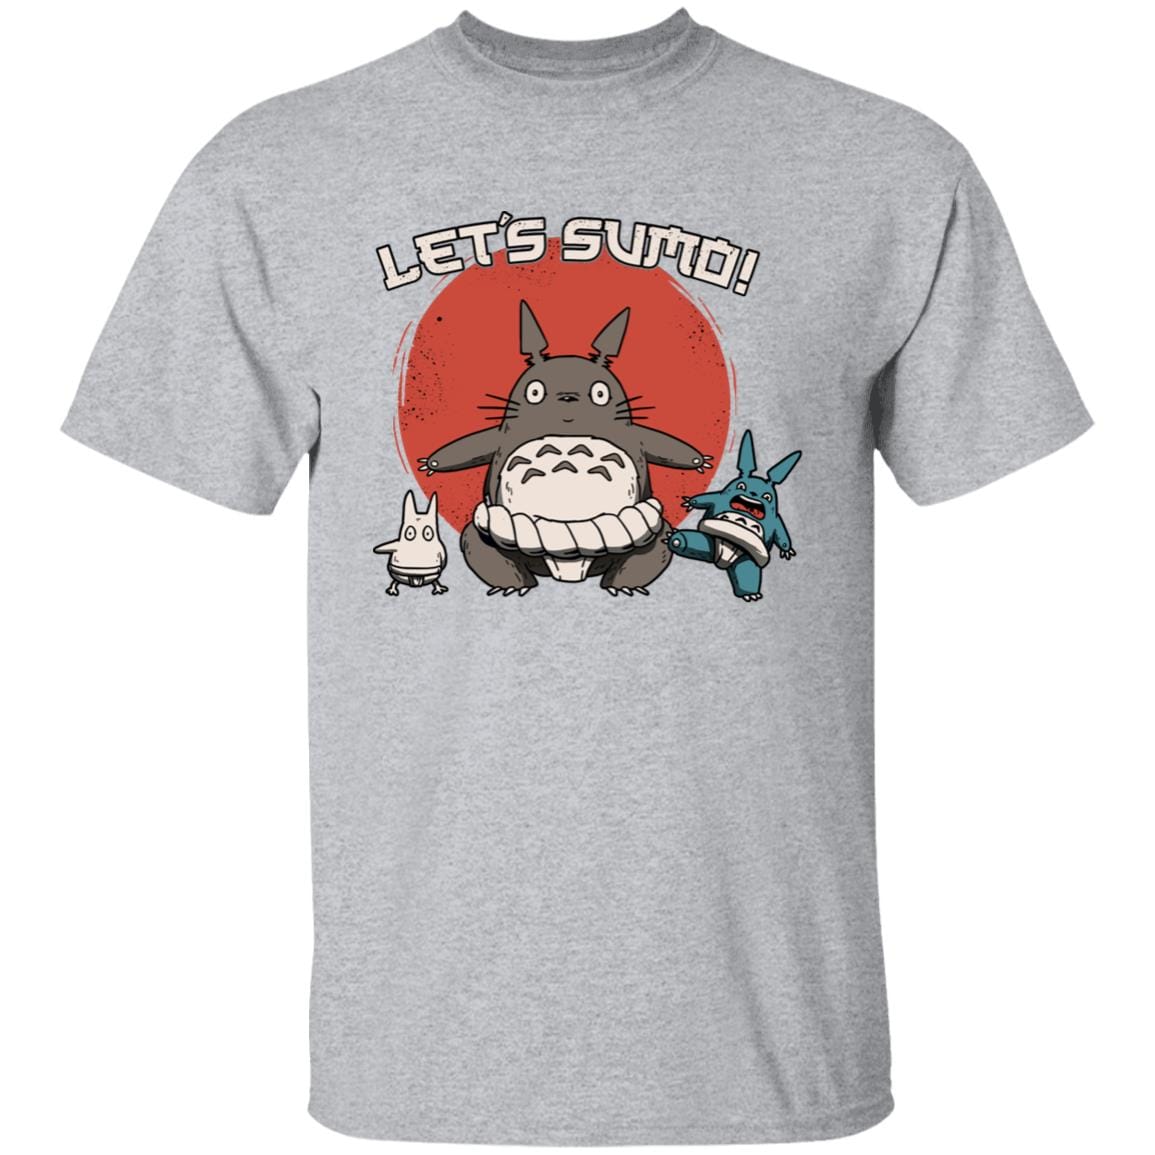 Totoro Onesie Pajama For Kid